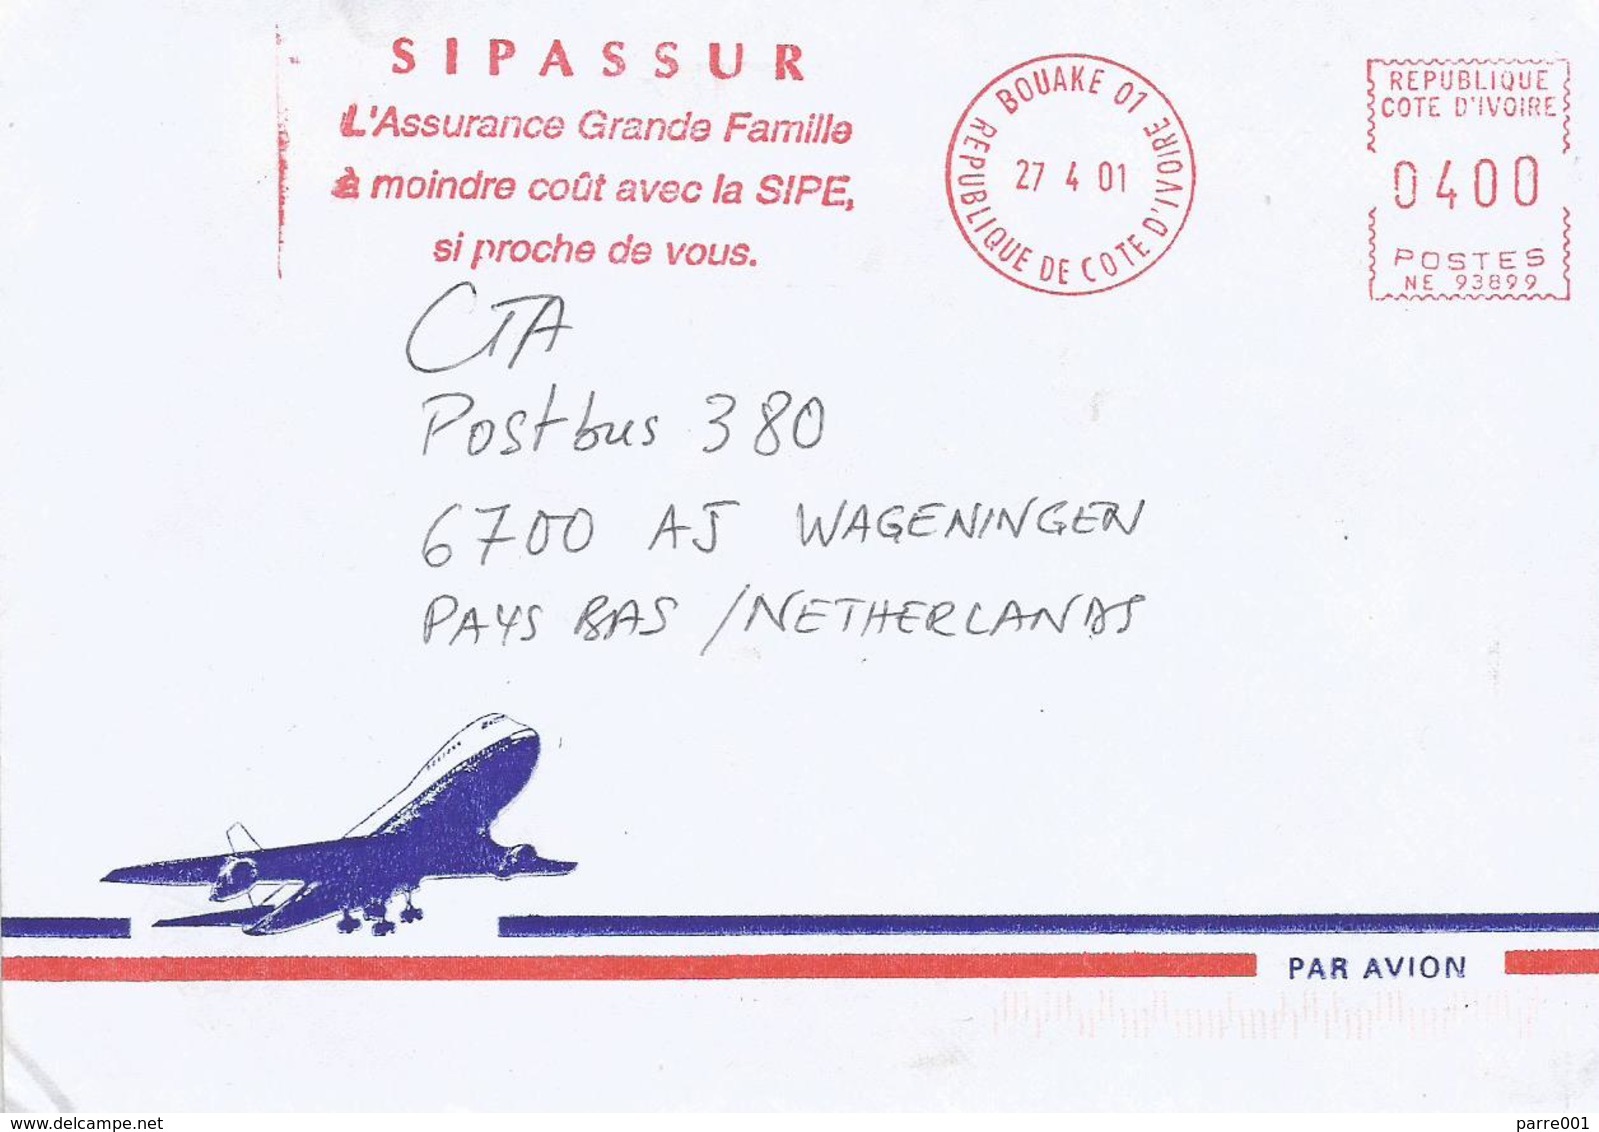 Cote D'Ivoire Ivory Coast 2001 Bouake 01 Post Office Meter Secap “NE” 93899 Insurance Slogan EMA Cover - Ivory Coast (1960-...)